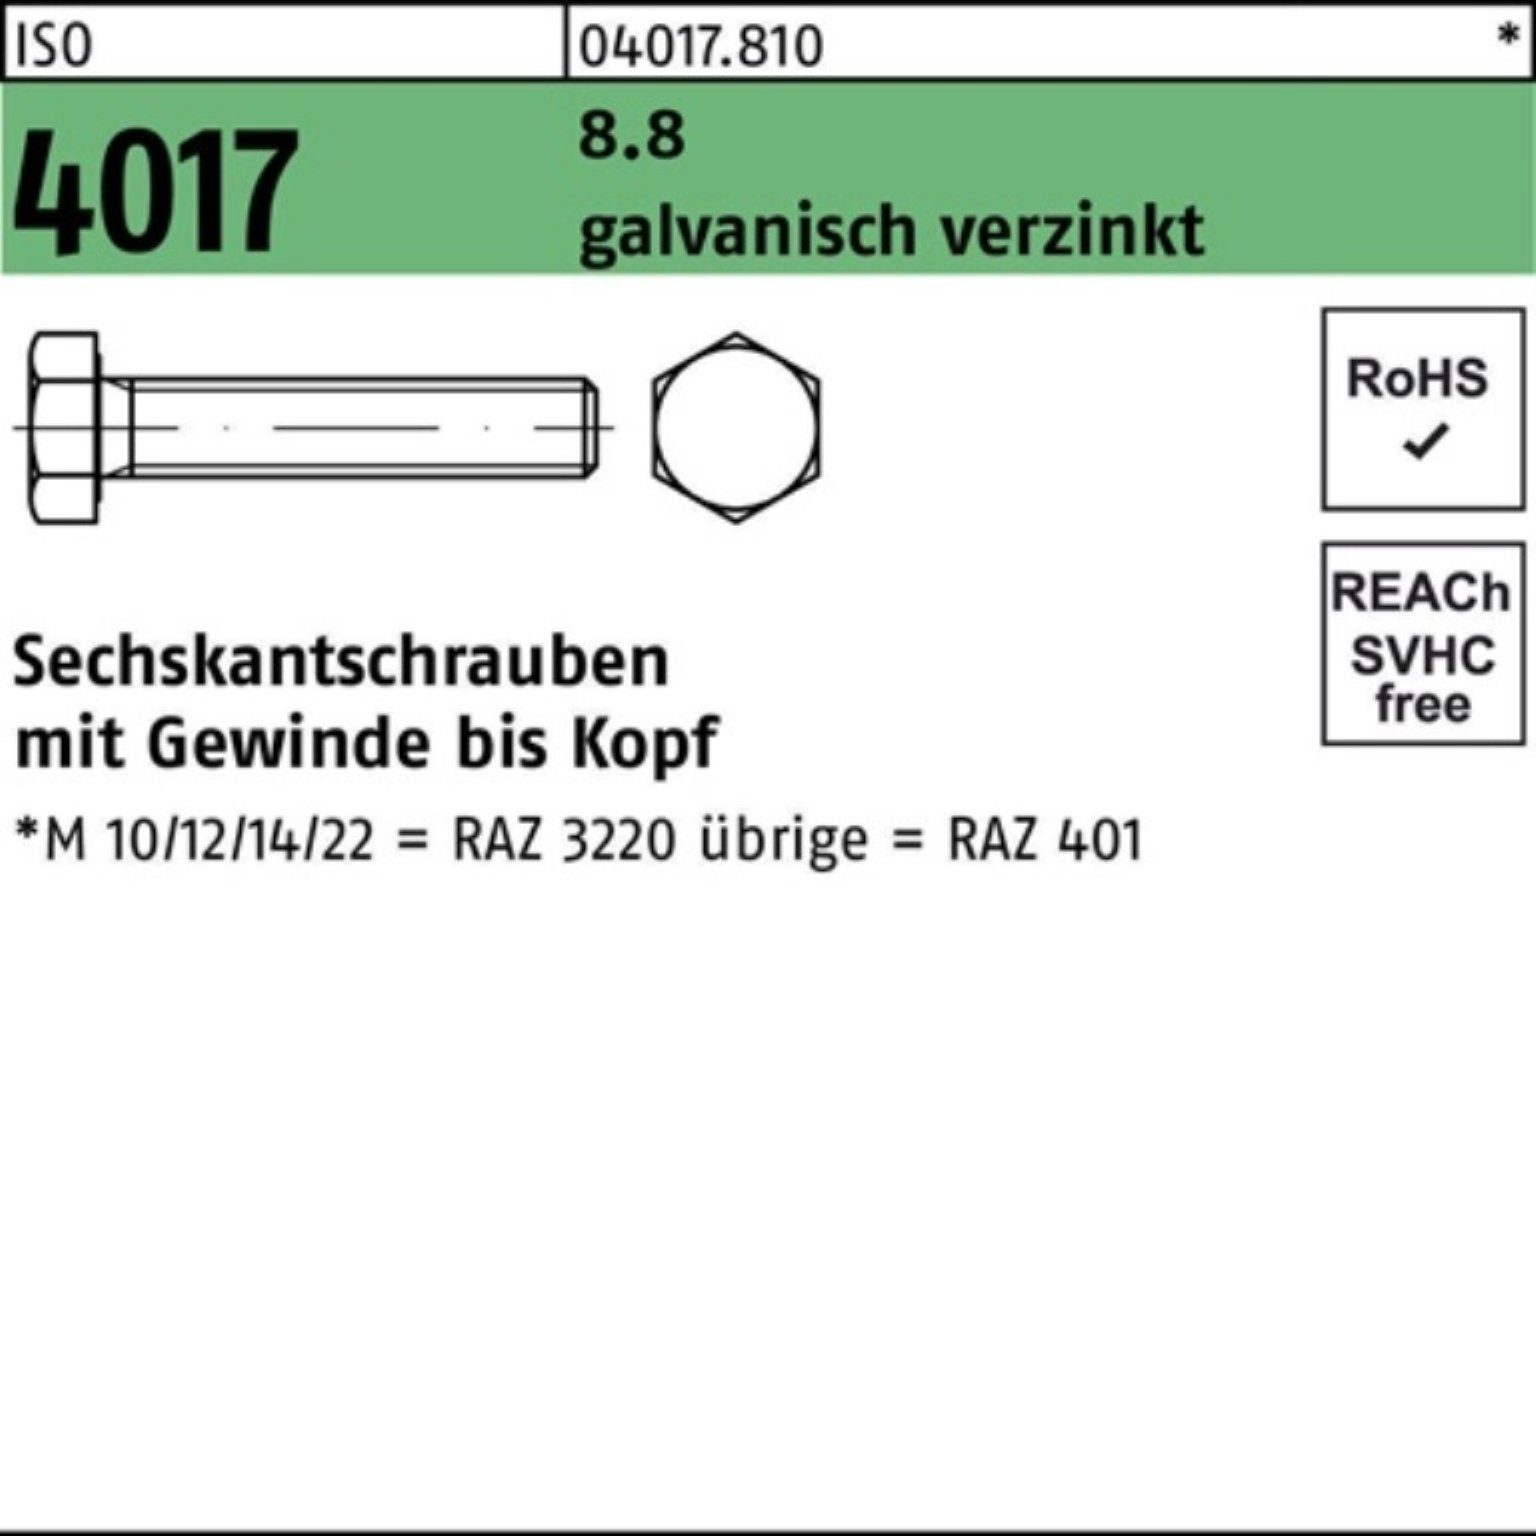 Bufab Sechskantschraube 100er Pack Sechskantschraube 4017 8.8 20 M5x 100 VG ISO St galv.verz